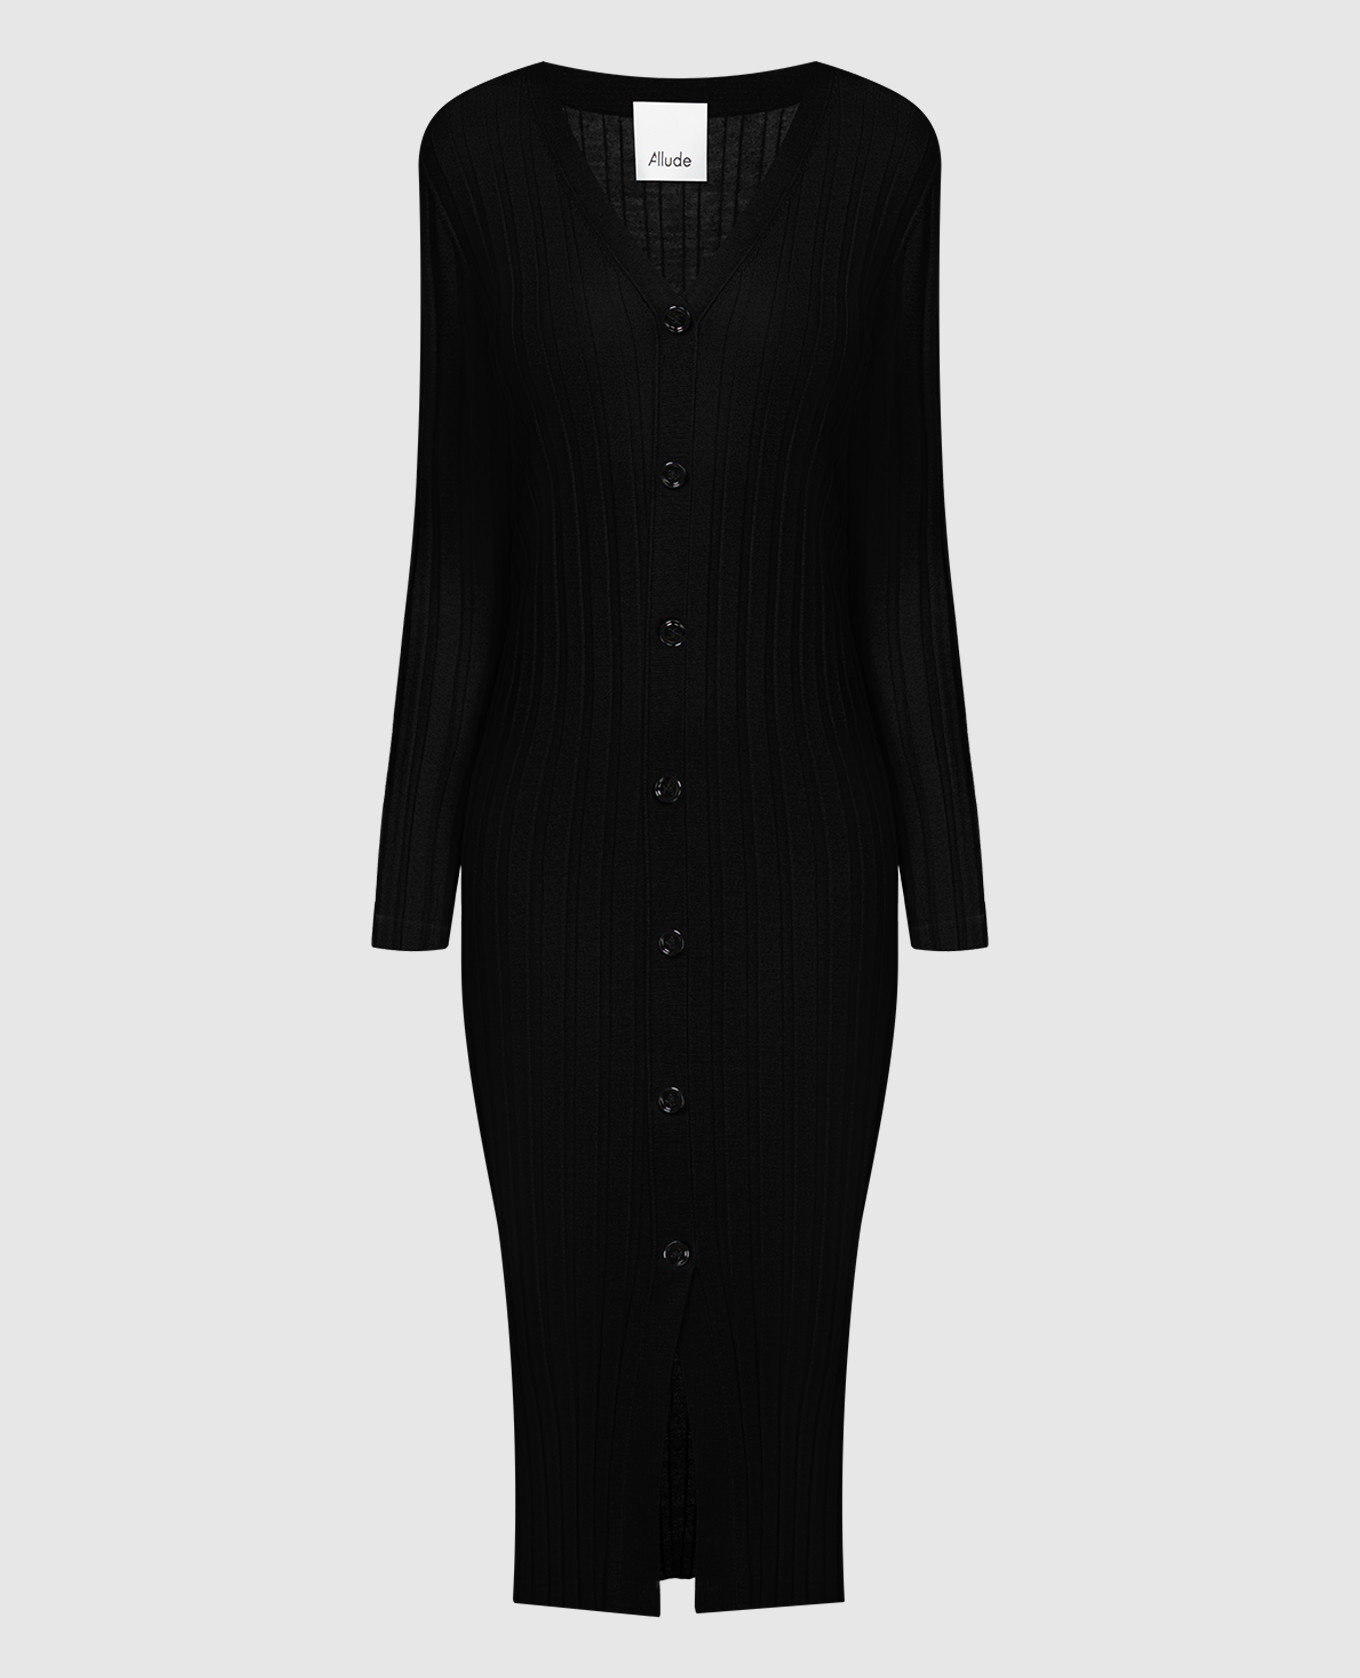 Black midi dress made of wool